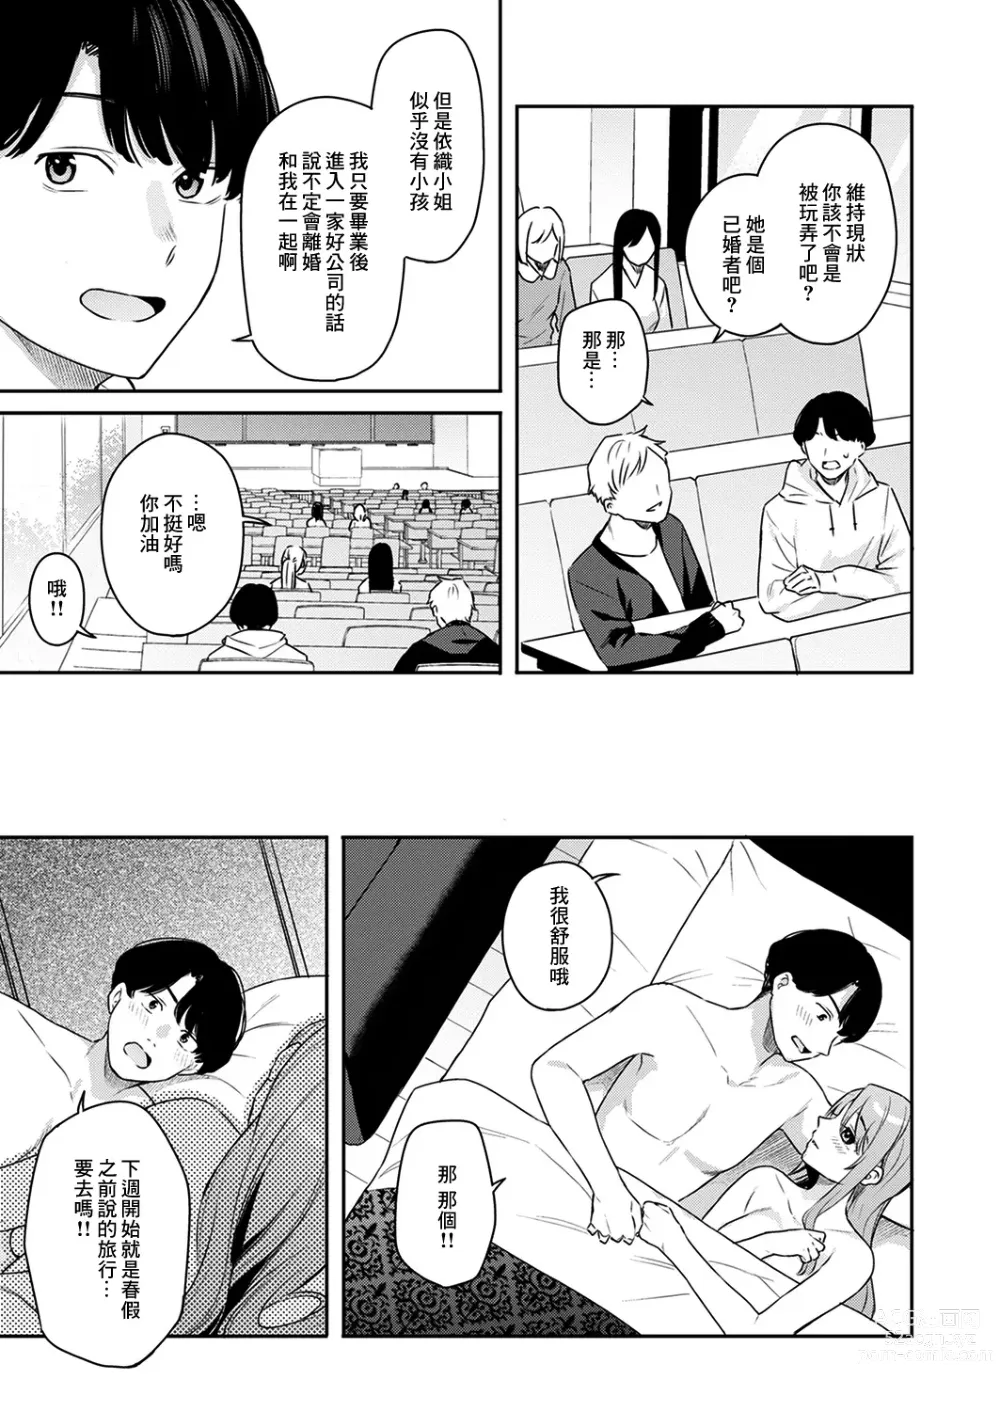 Page 7 of manga Otona no Issen Lesson 2